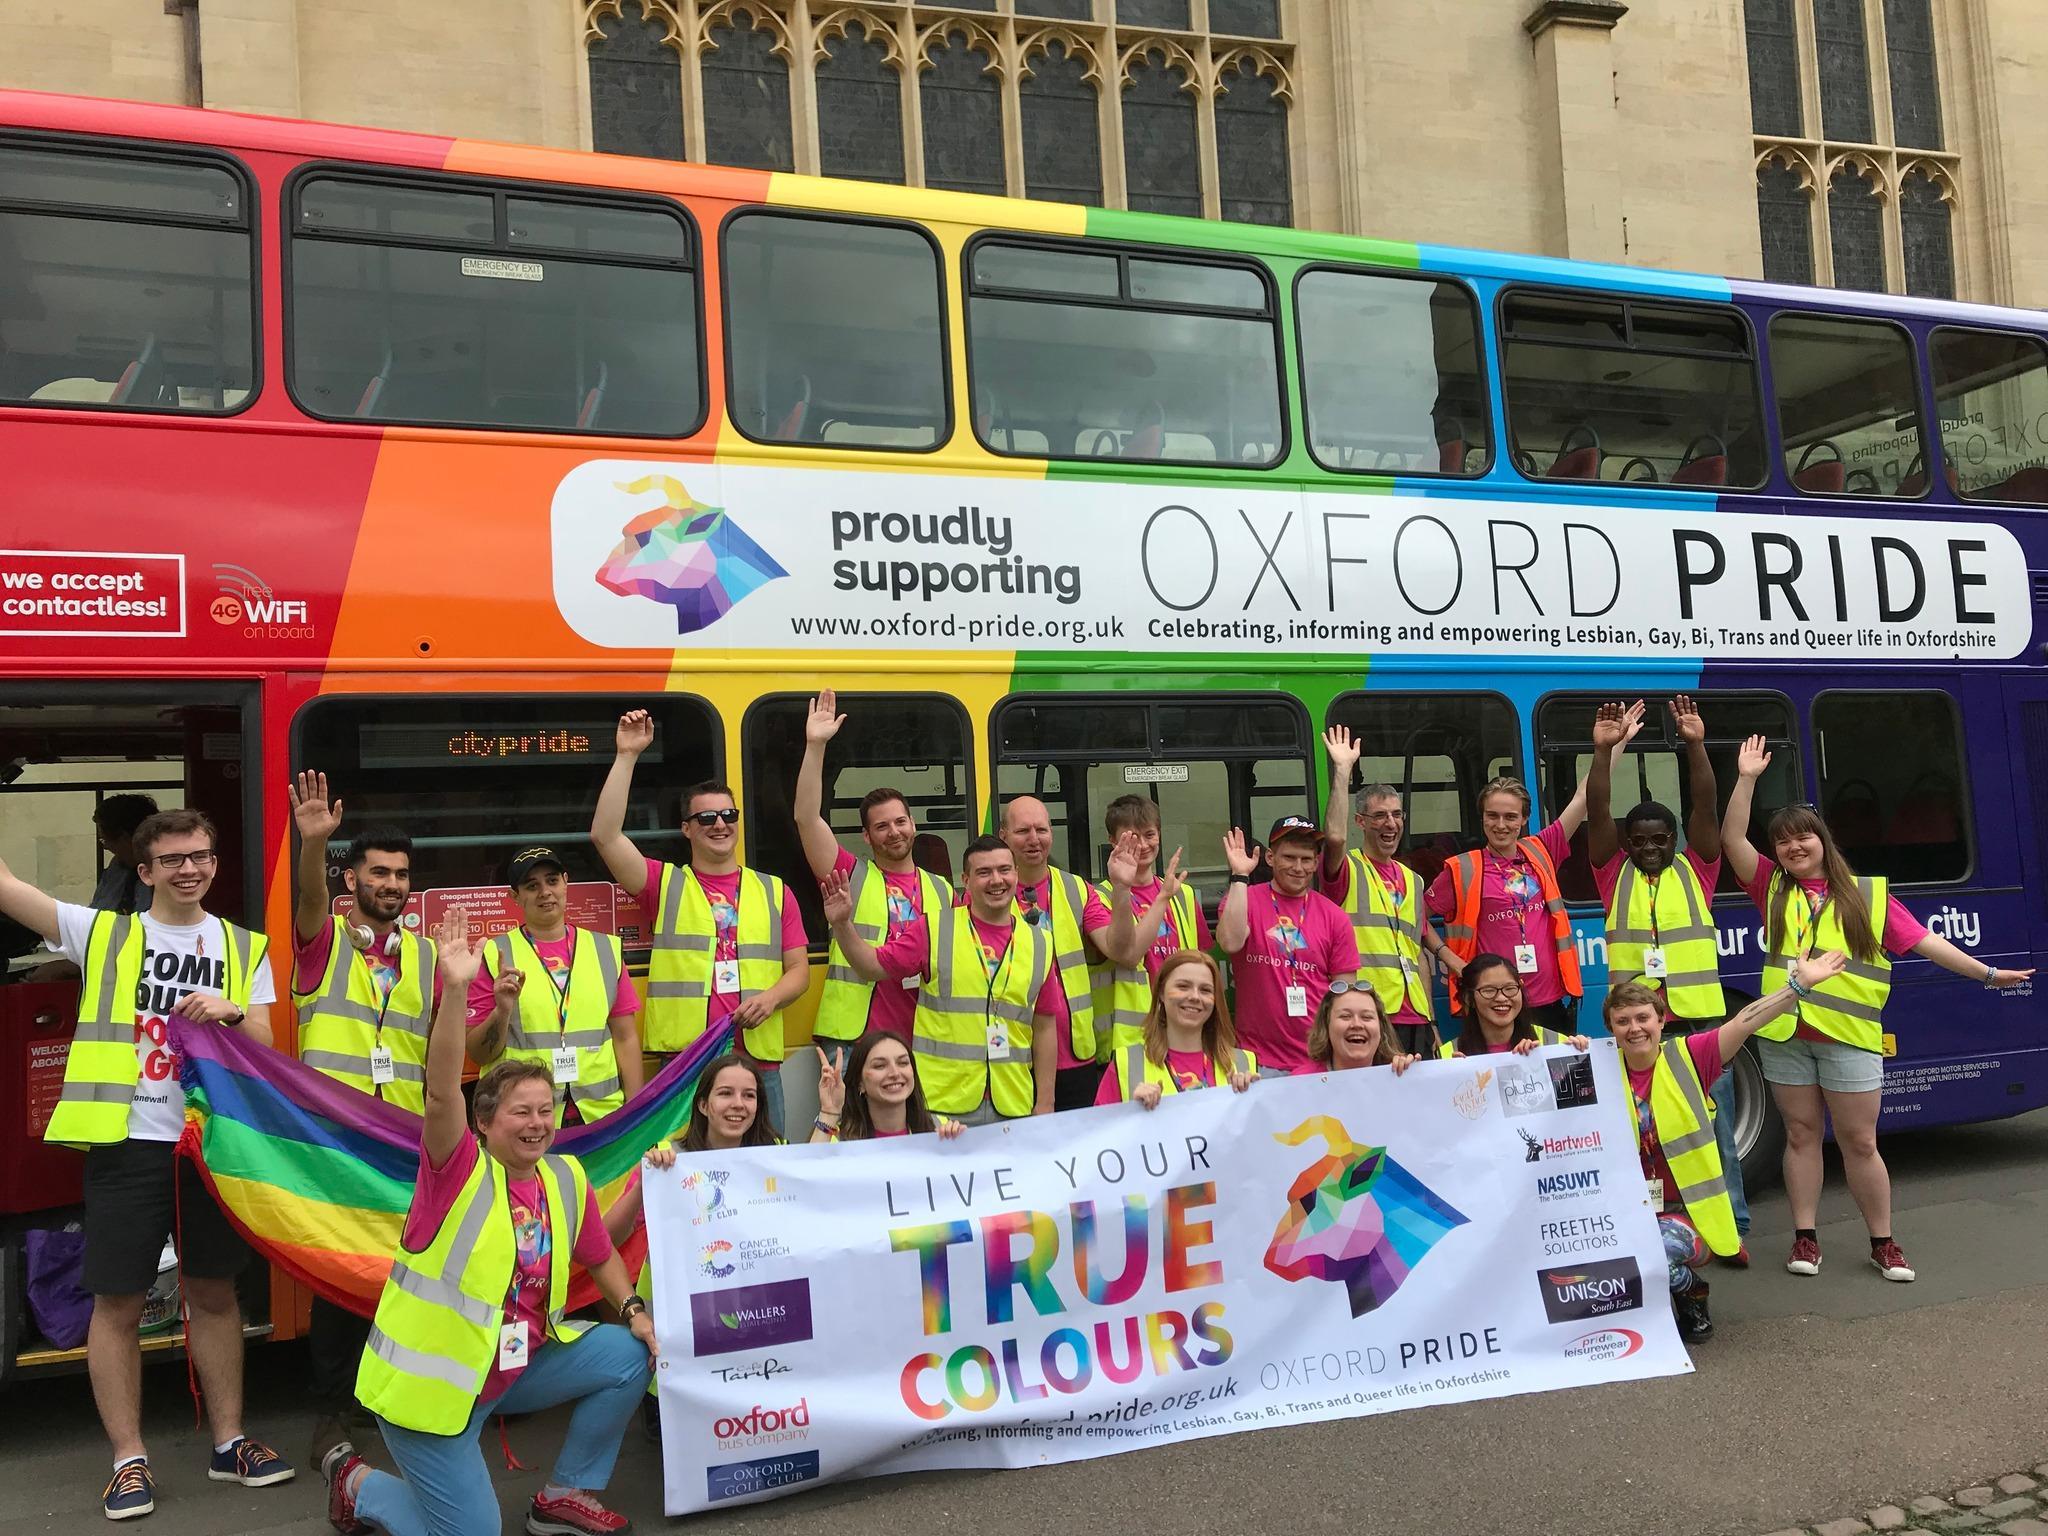 Volunteers cheering in front of the Oxford Pride bus